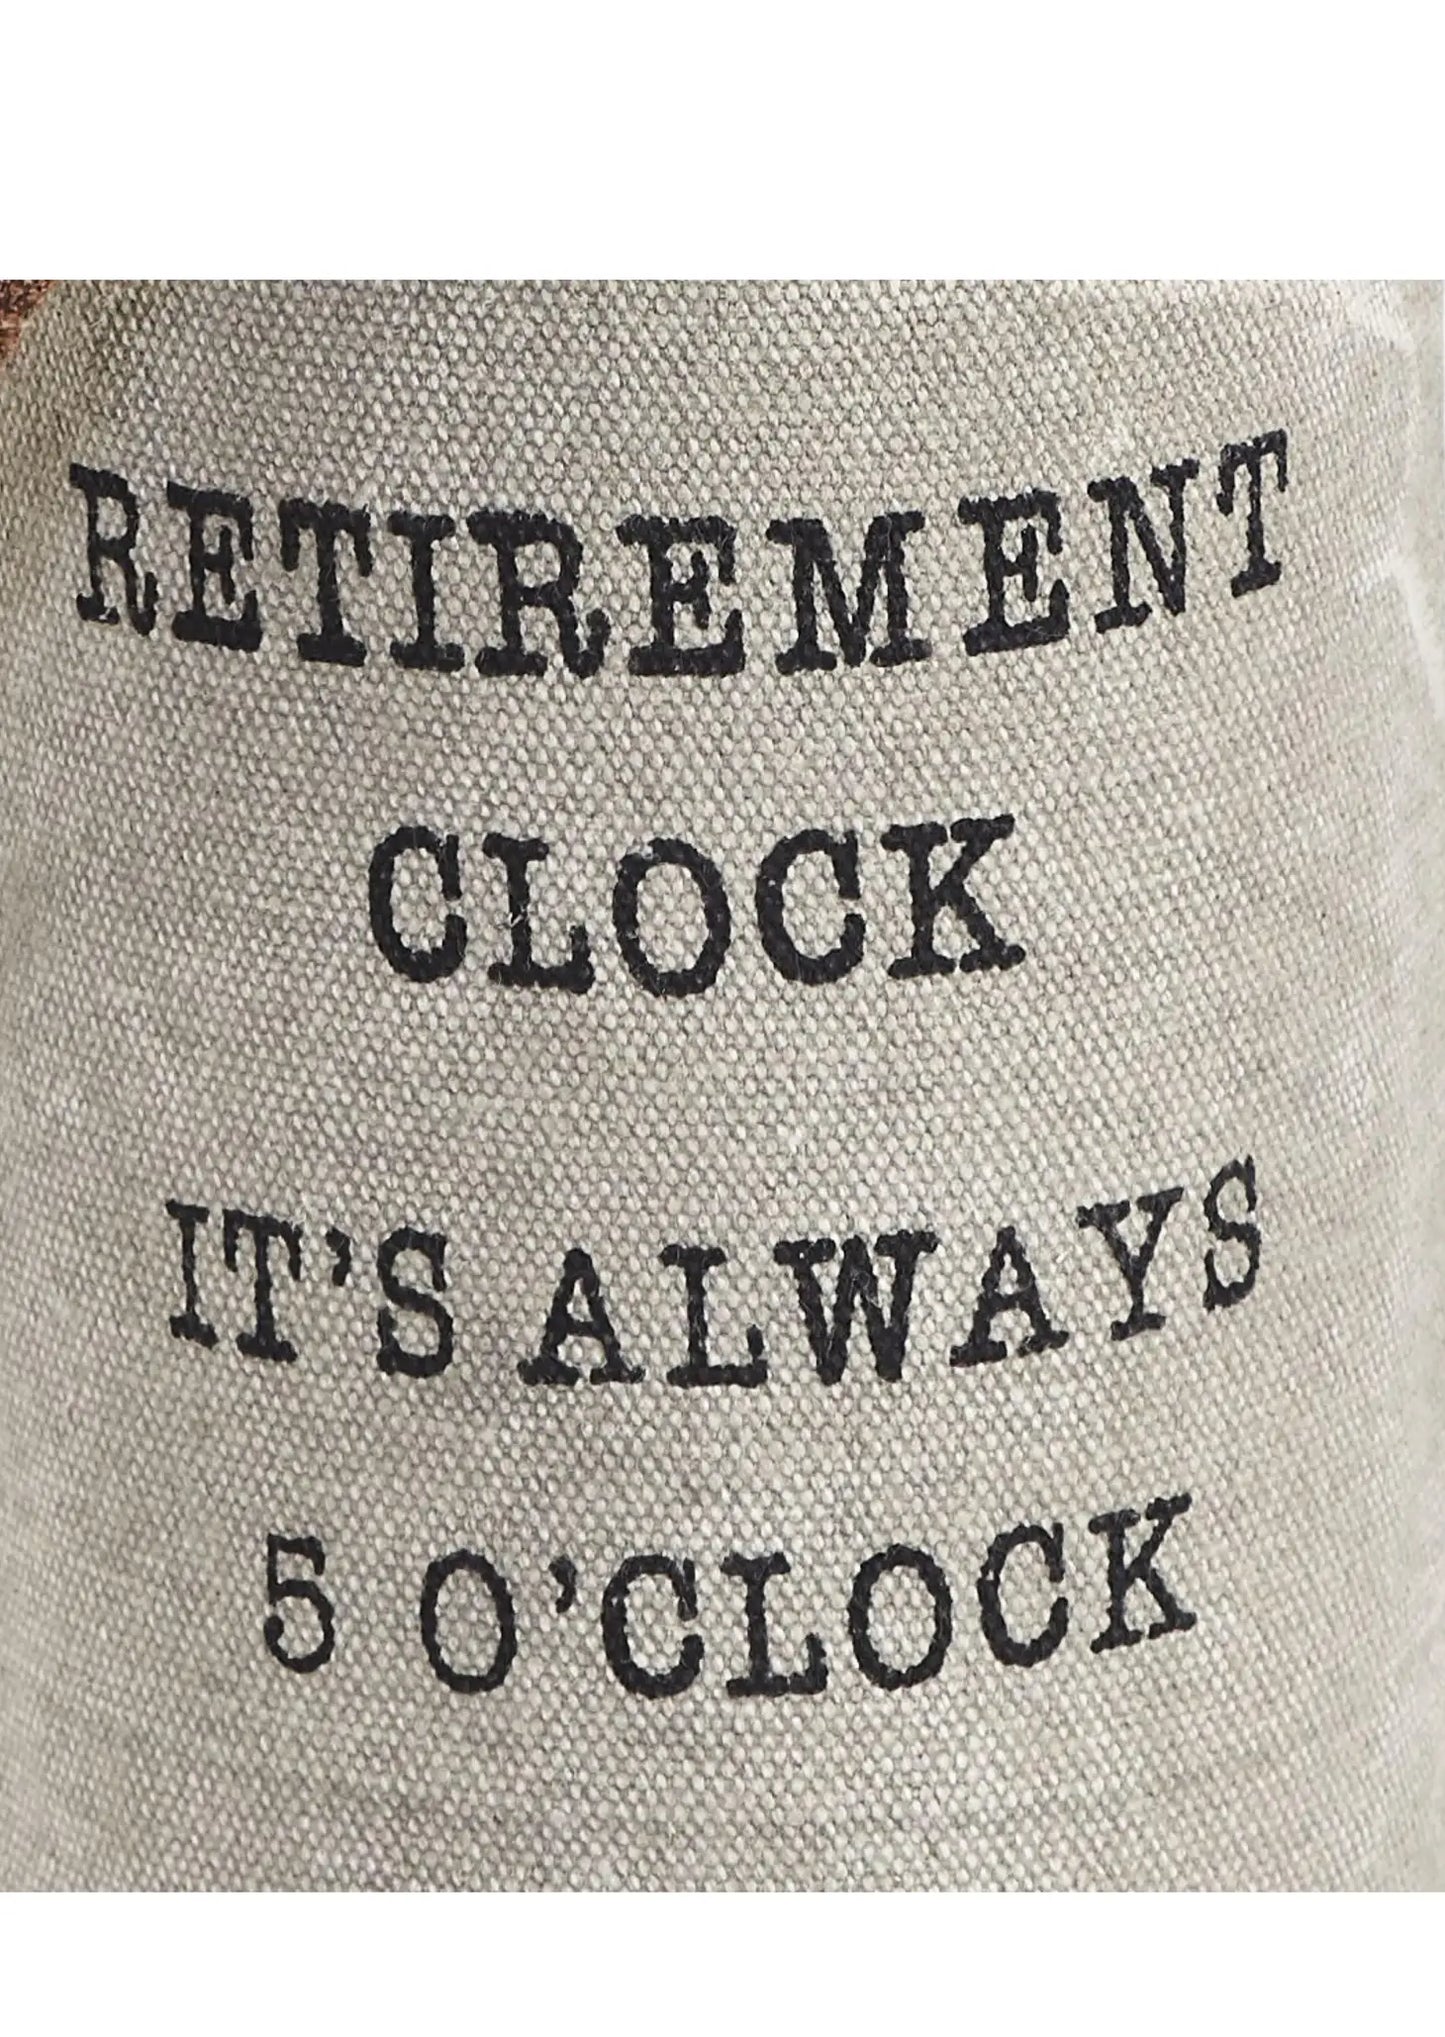 Retirement Clock, It's Always 5 O'Clock Wine Carrier Bag